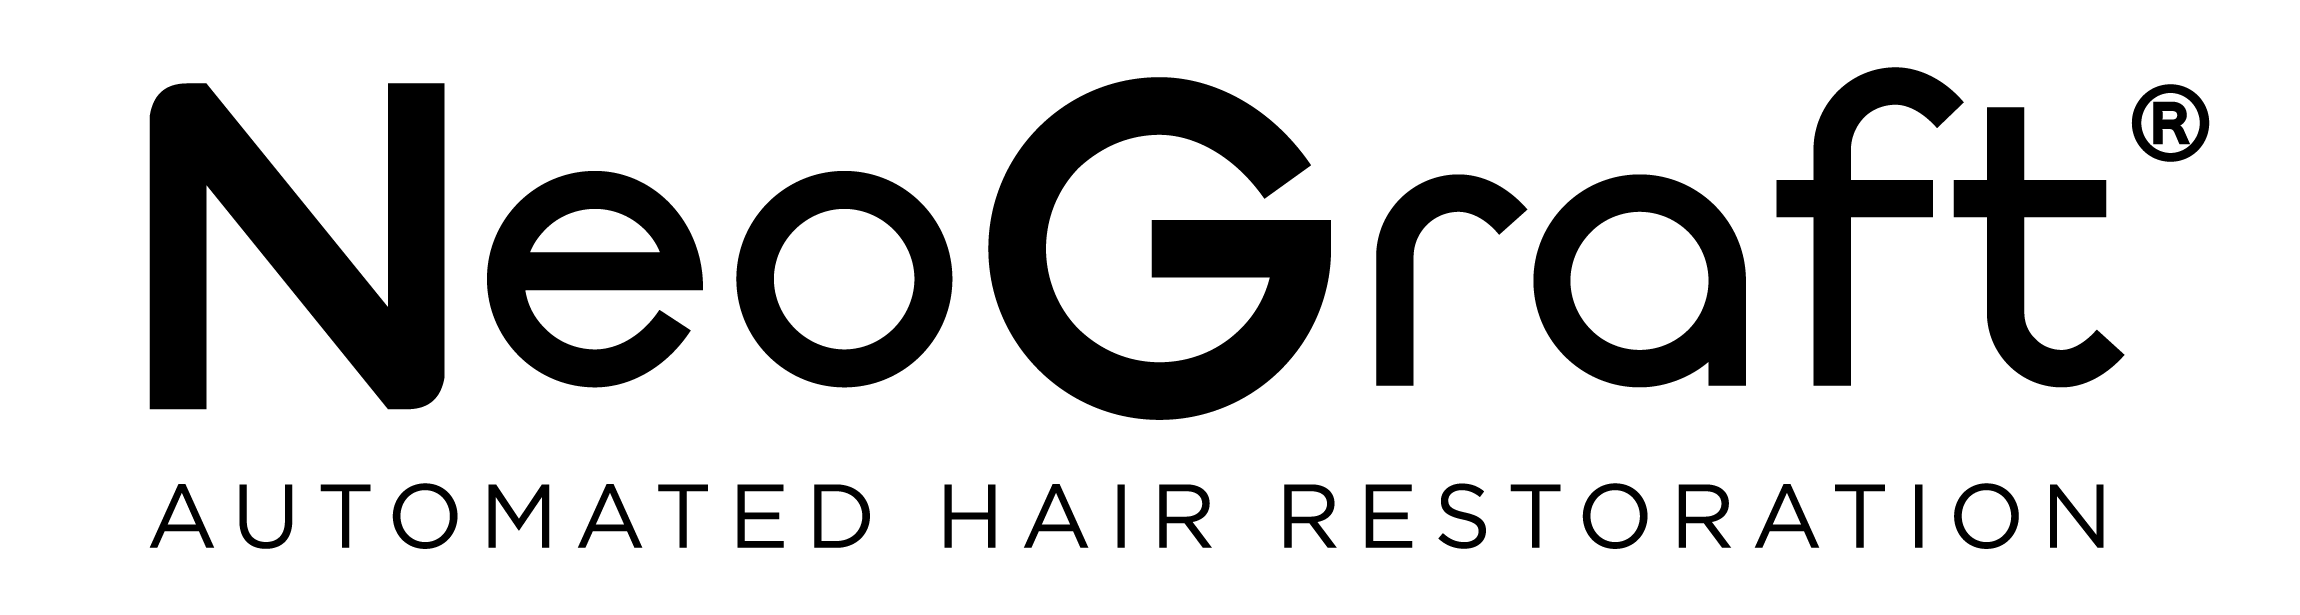 neograft logo